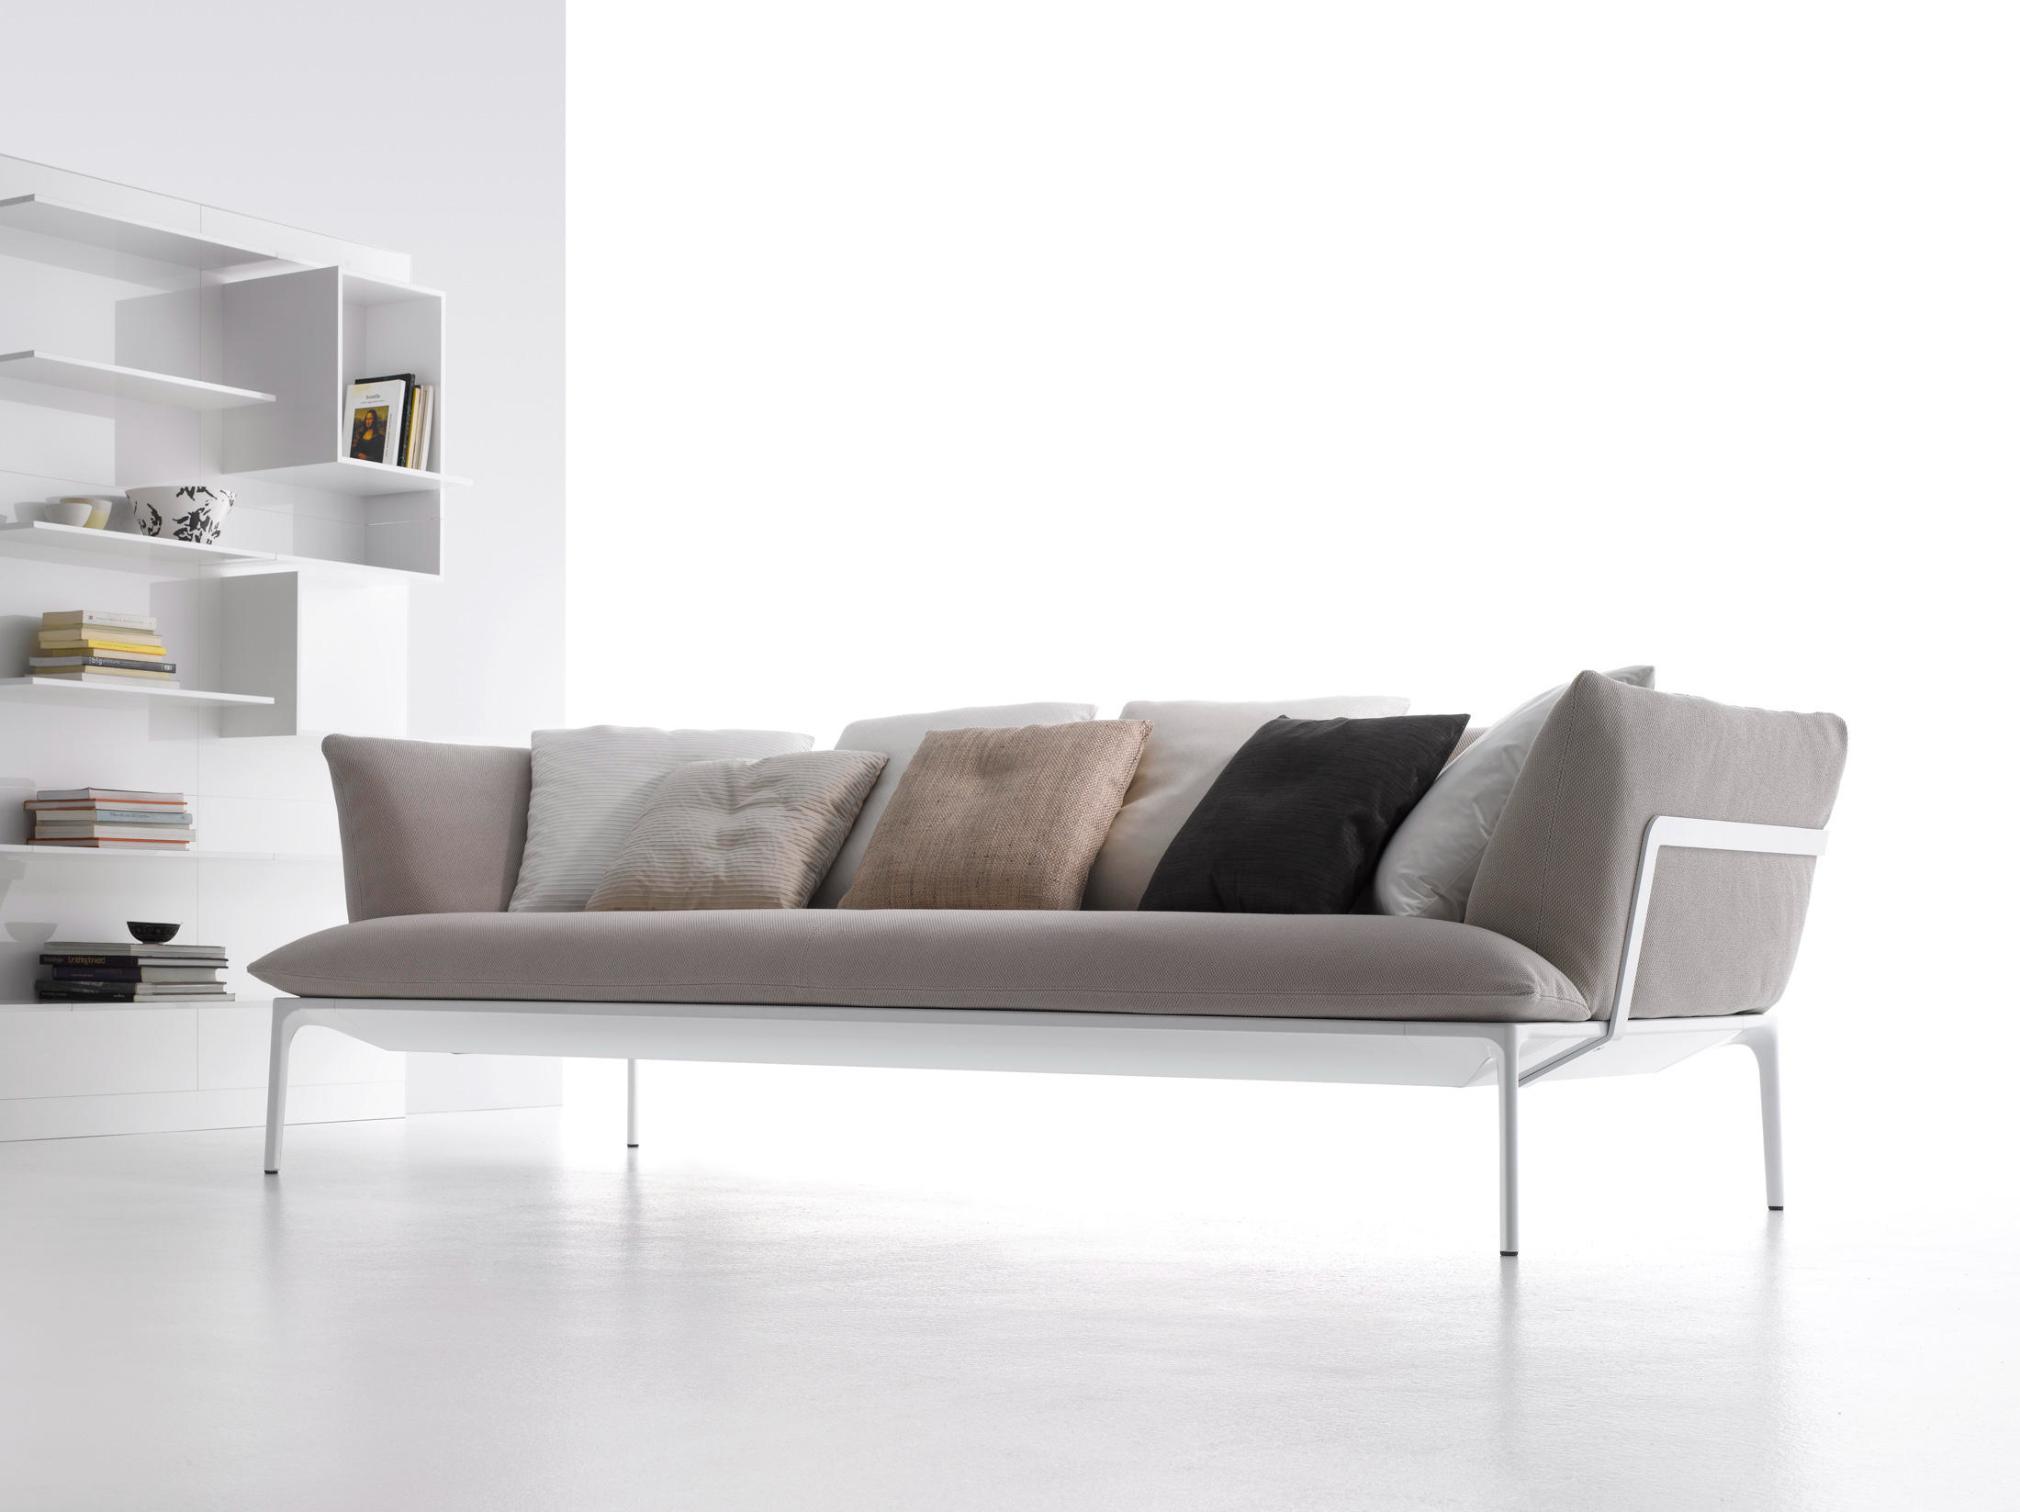 Yale Italian Sofa ☞ Dimensions: Length 220 cm